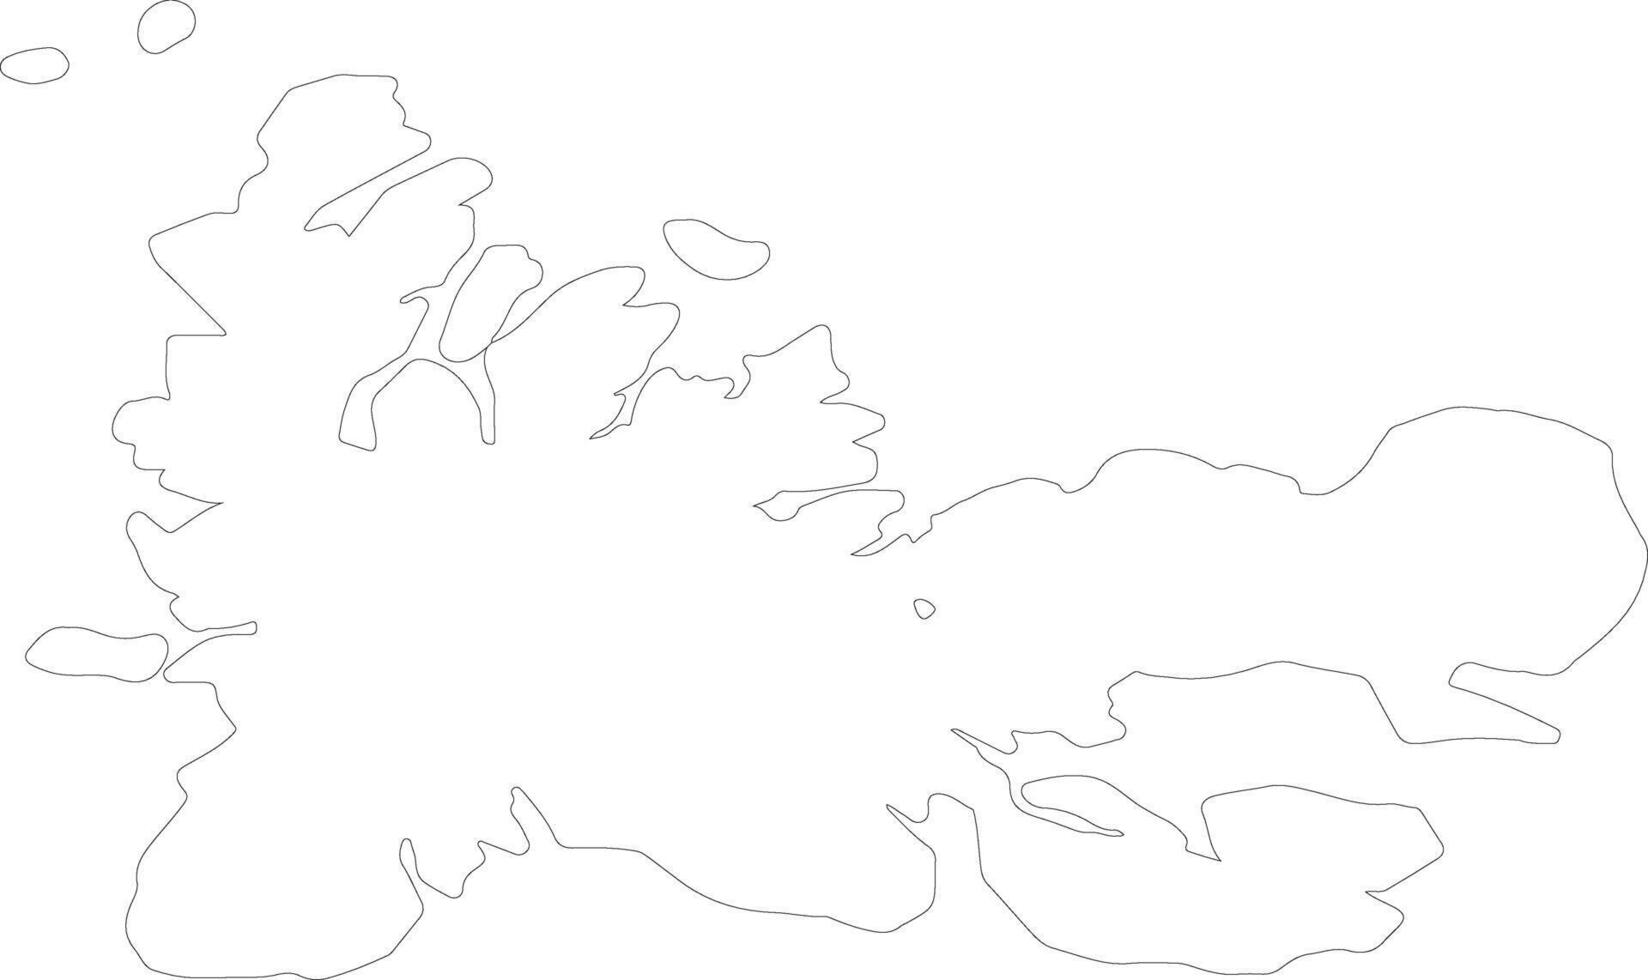 Archipel des Kerguelen French Southern and Antarctic Lands outline map vector